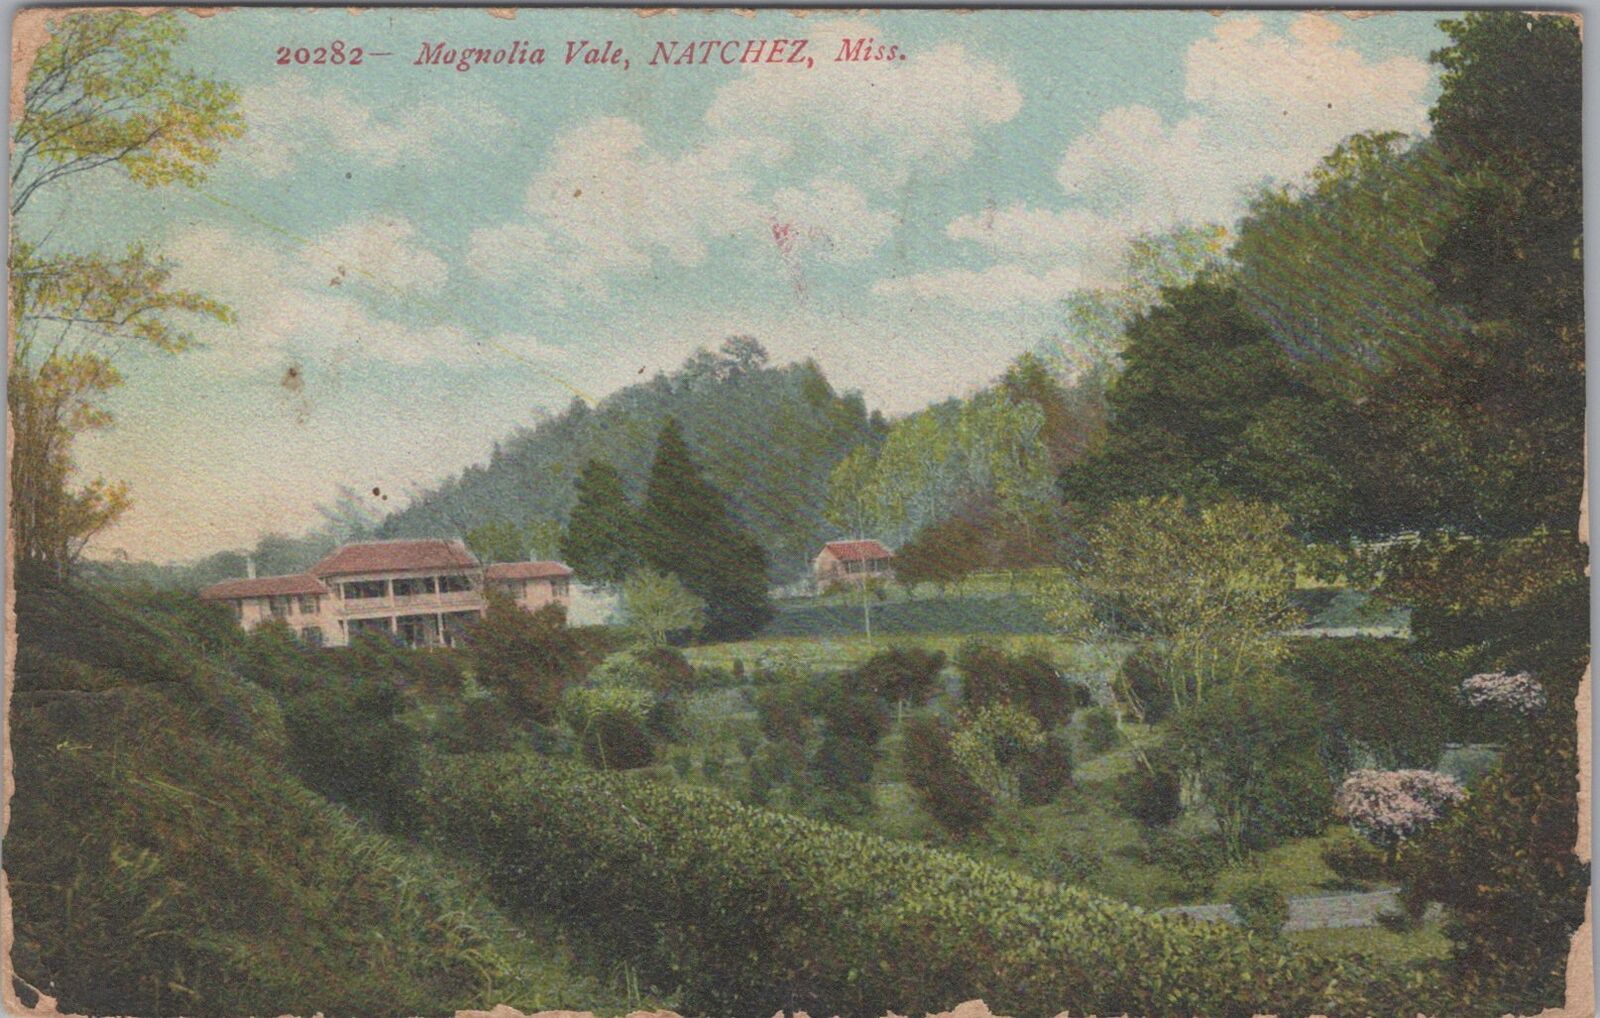 Magnolia Vale, Natchez Mississippi 1908 Postcard